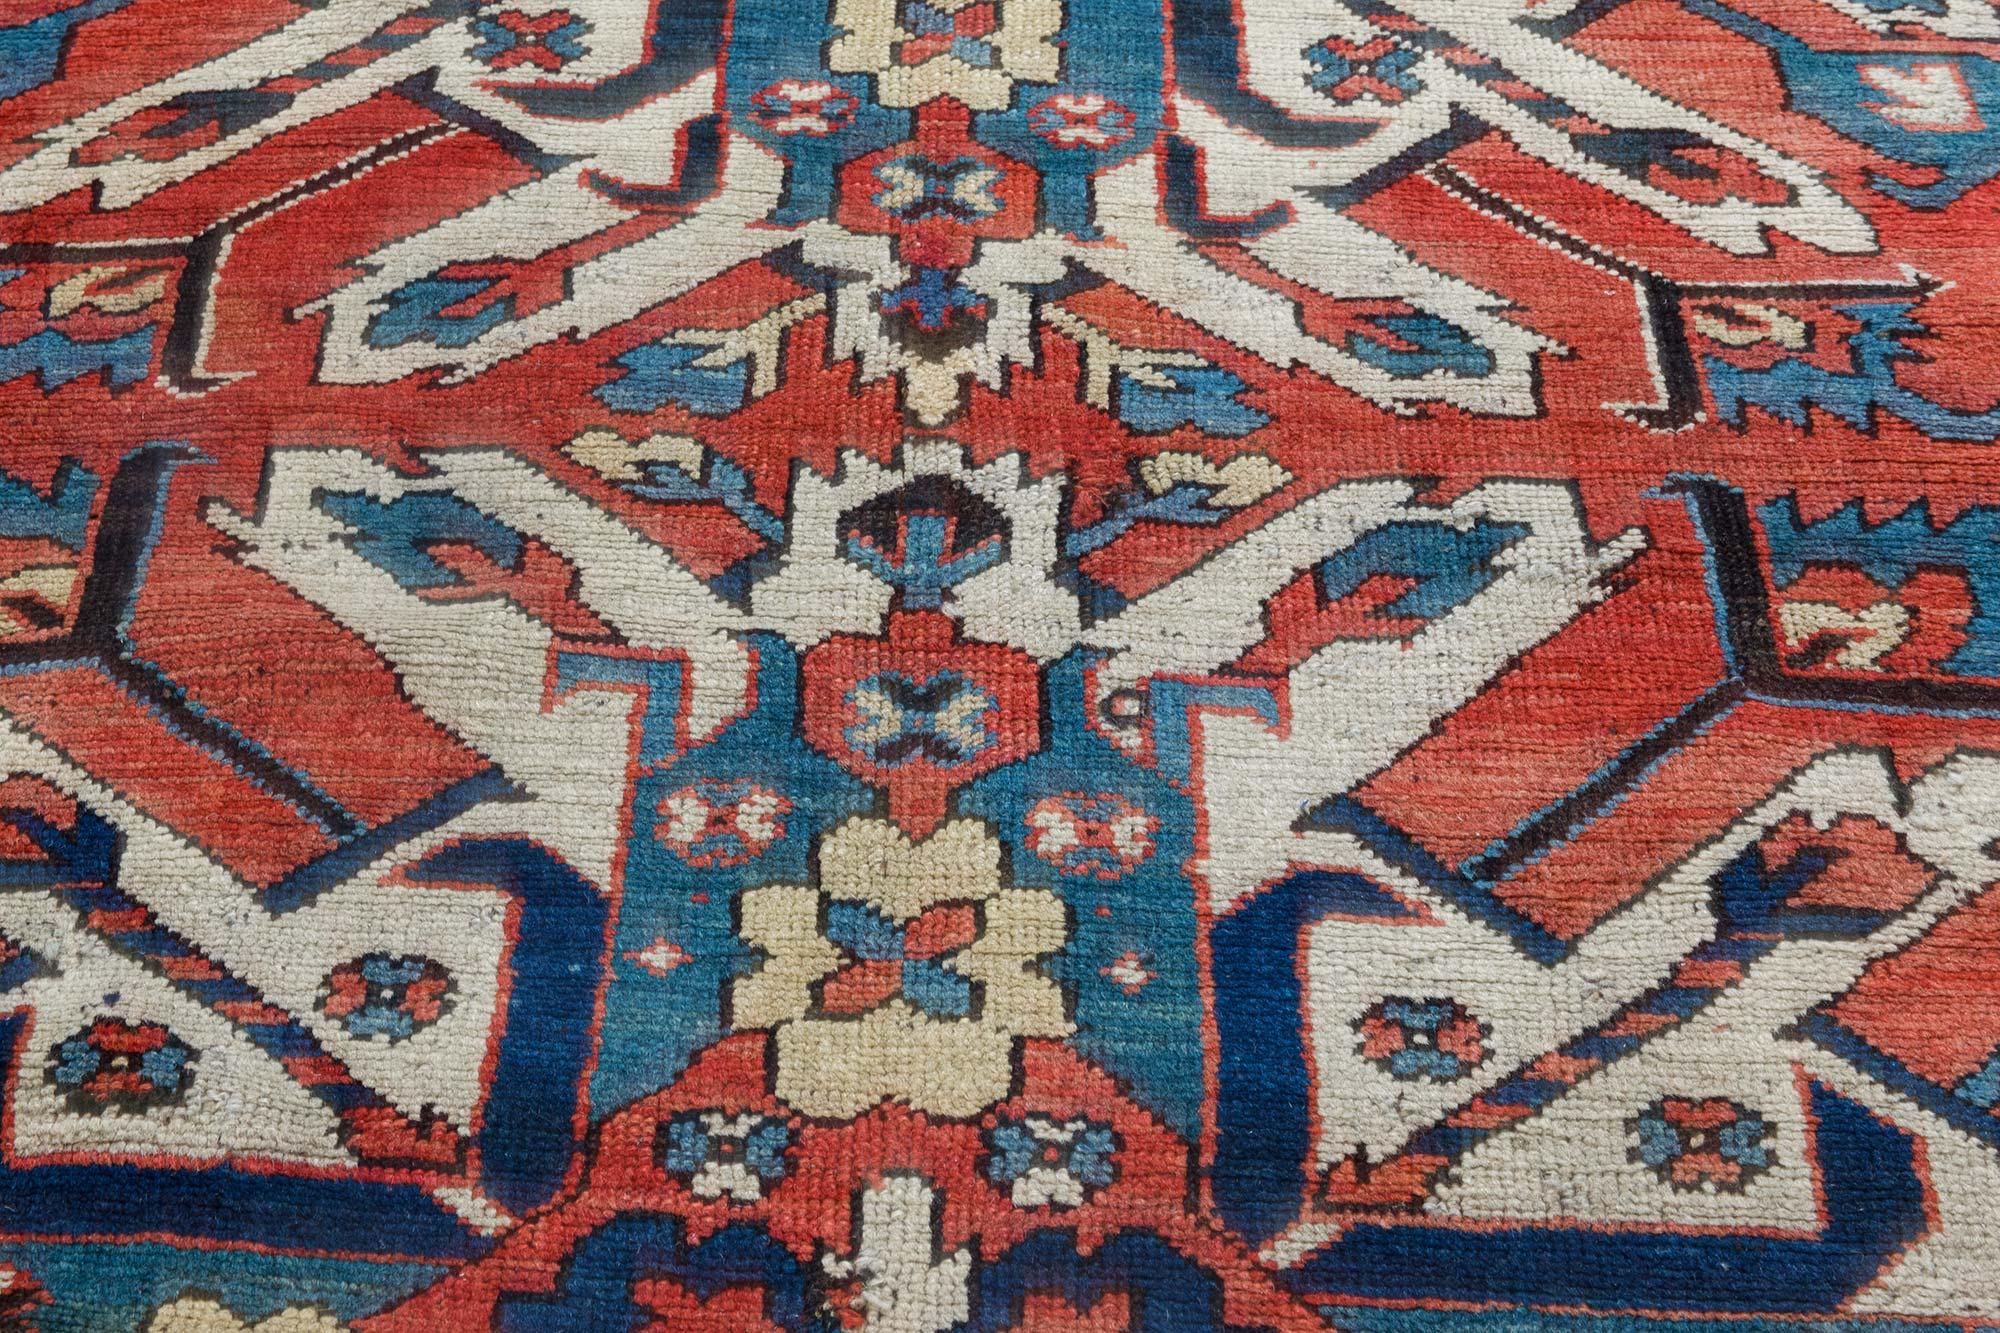 Kazakhstani 1920s Kazak Blue, Red and White Handmade Wool Rug